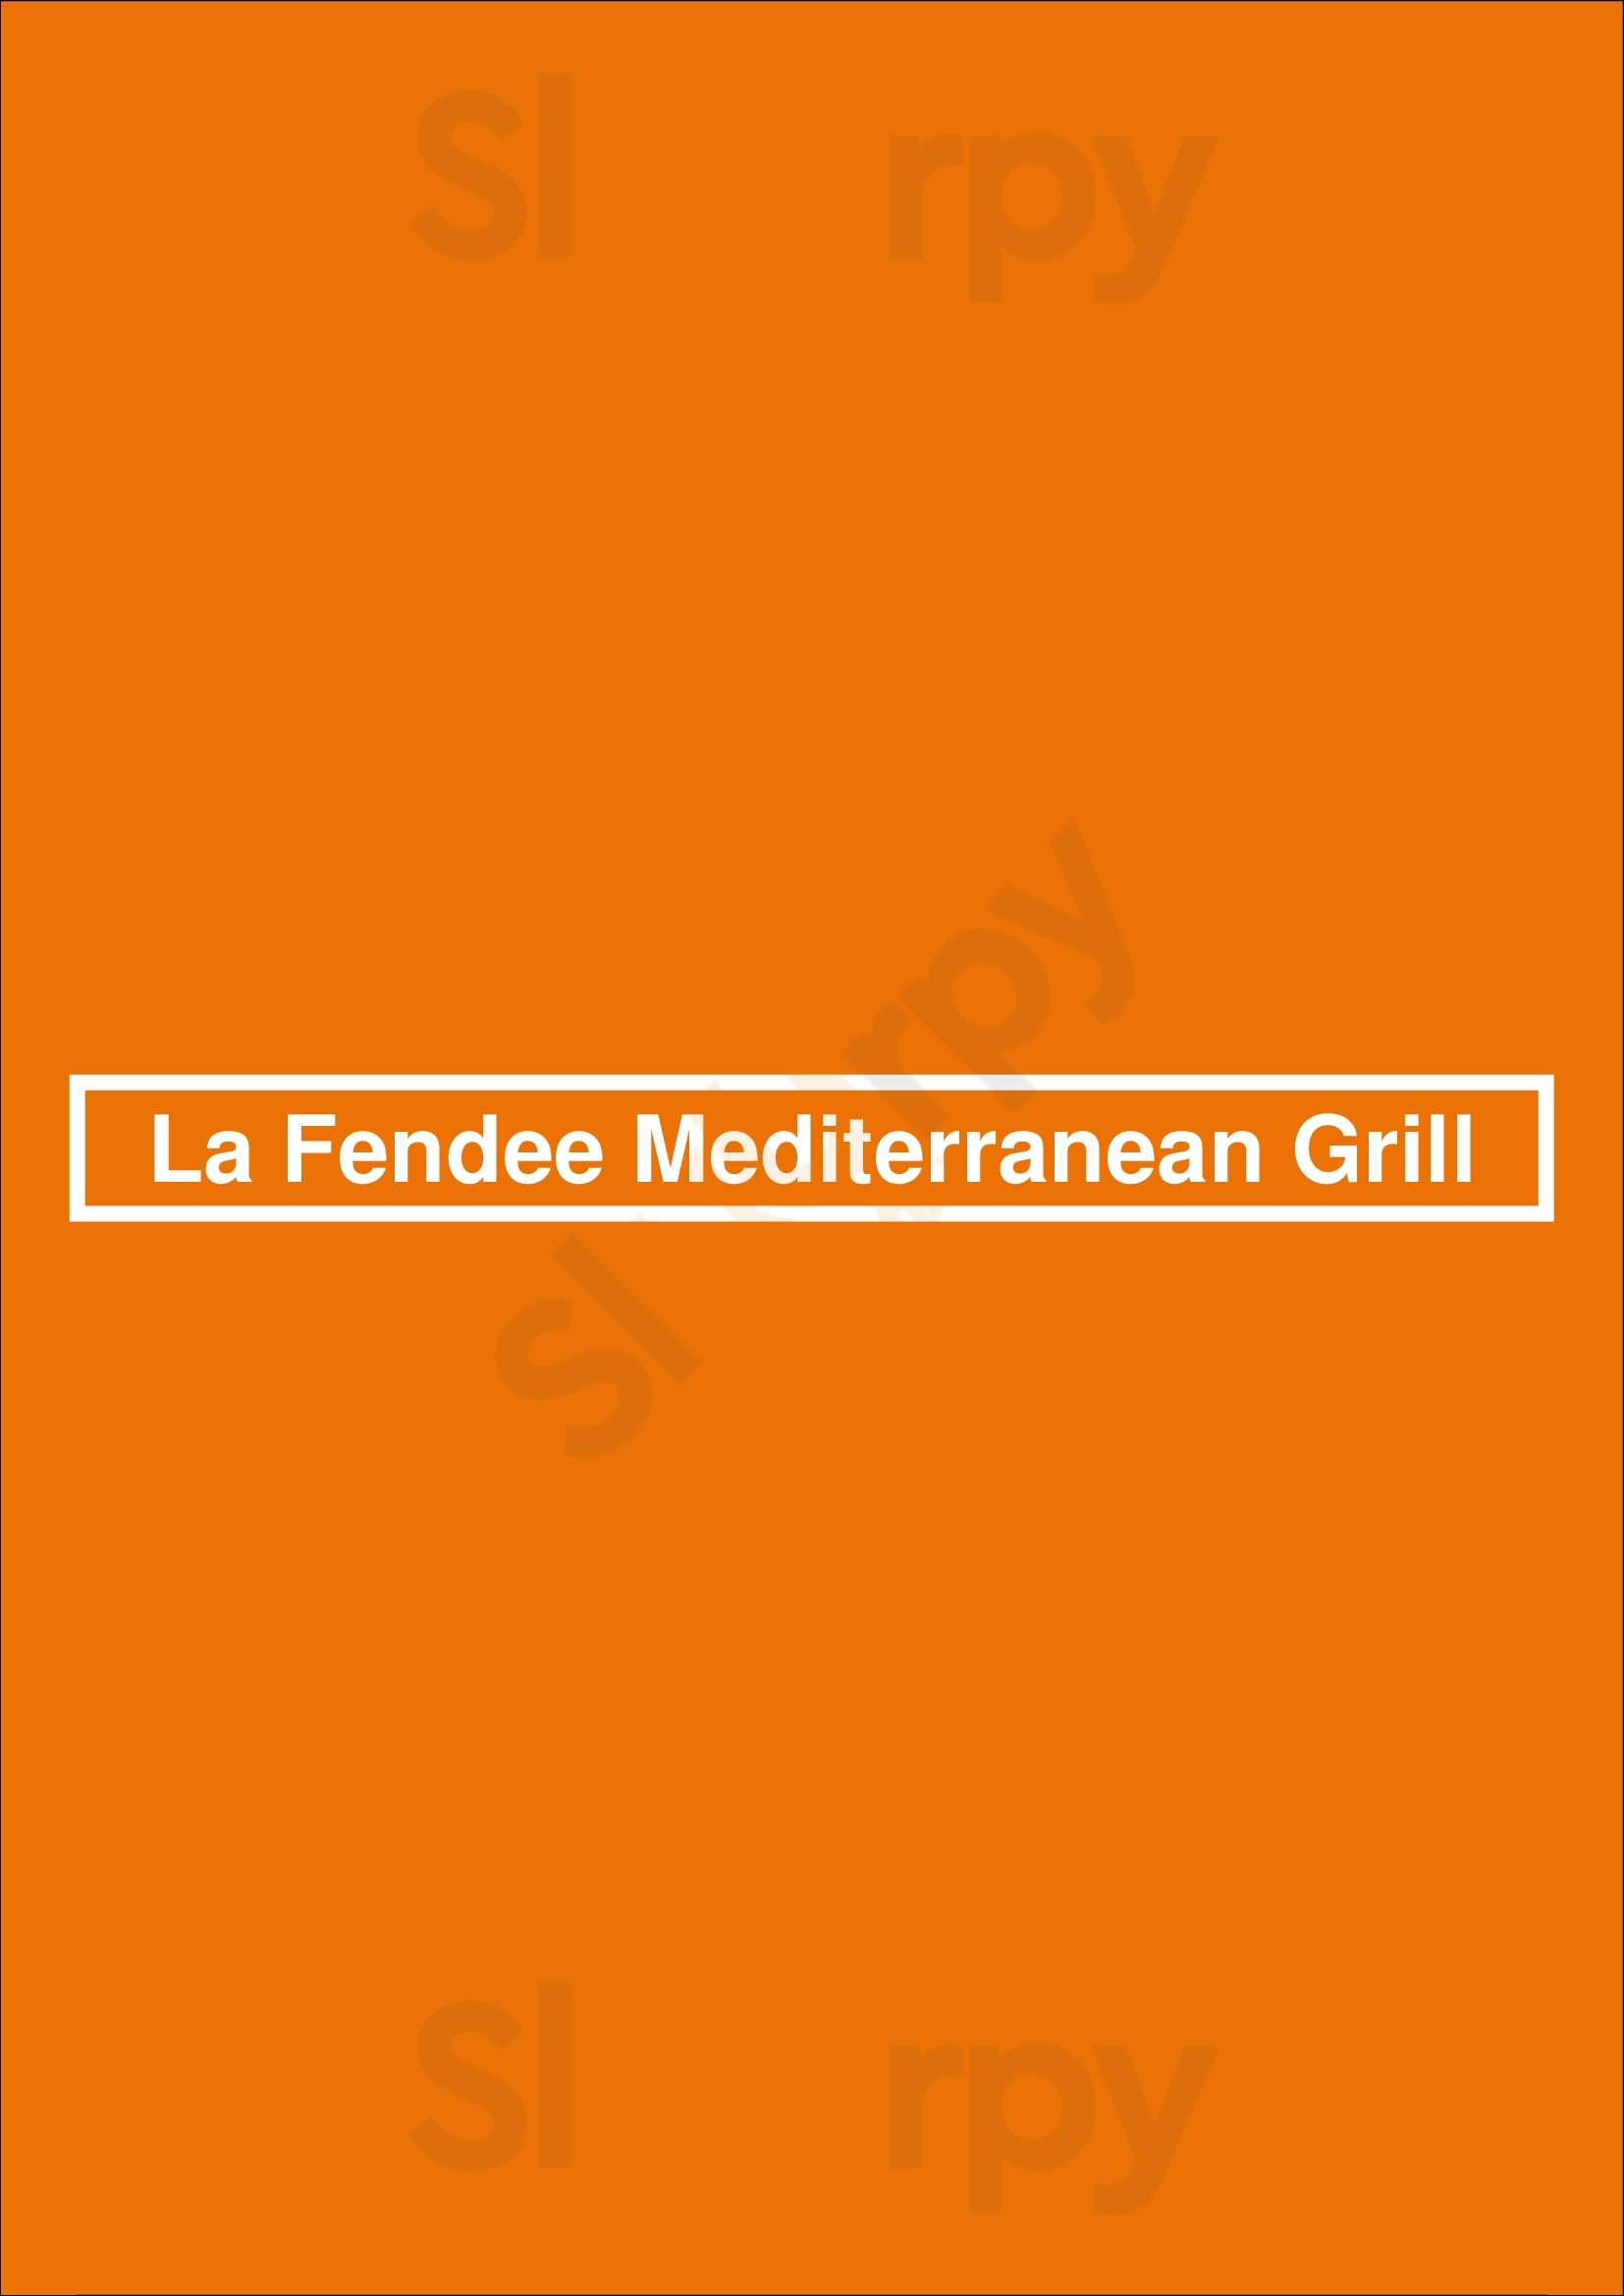 La Fendee Mediterranean Grill Houston Menu - 1